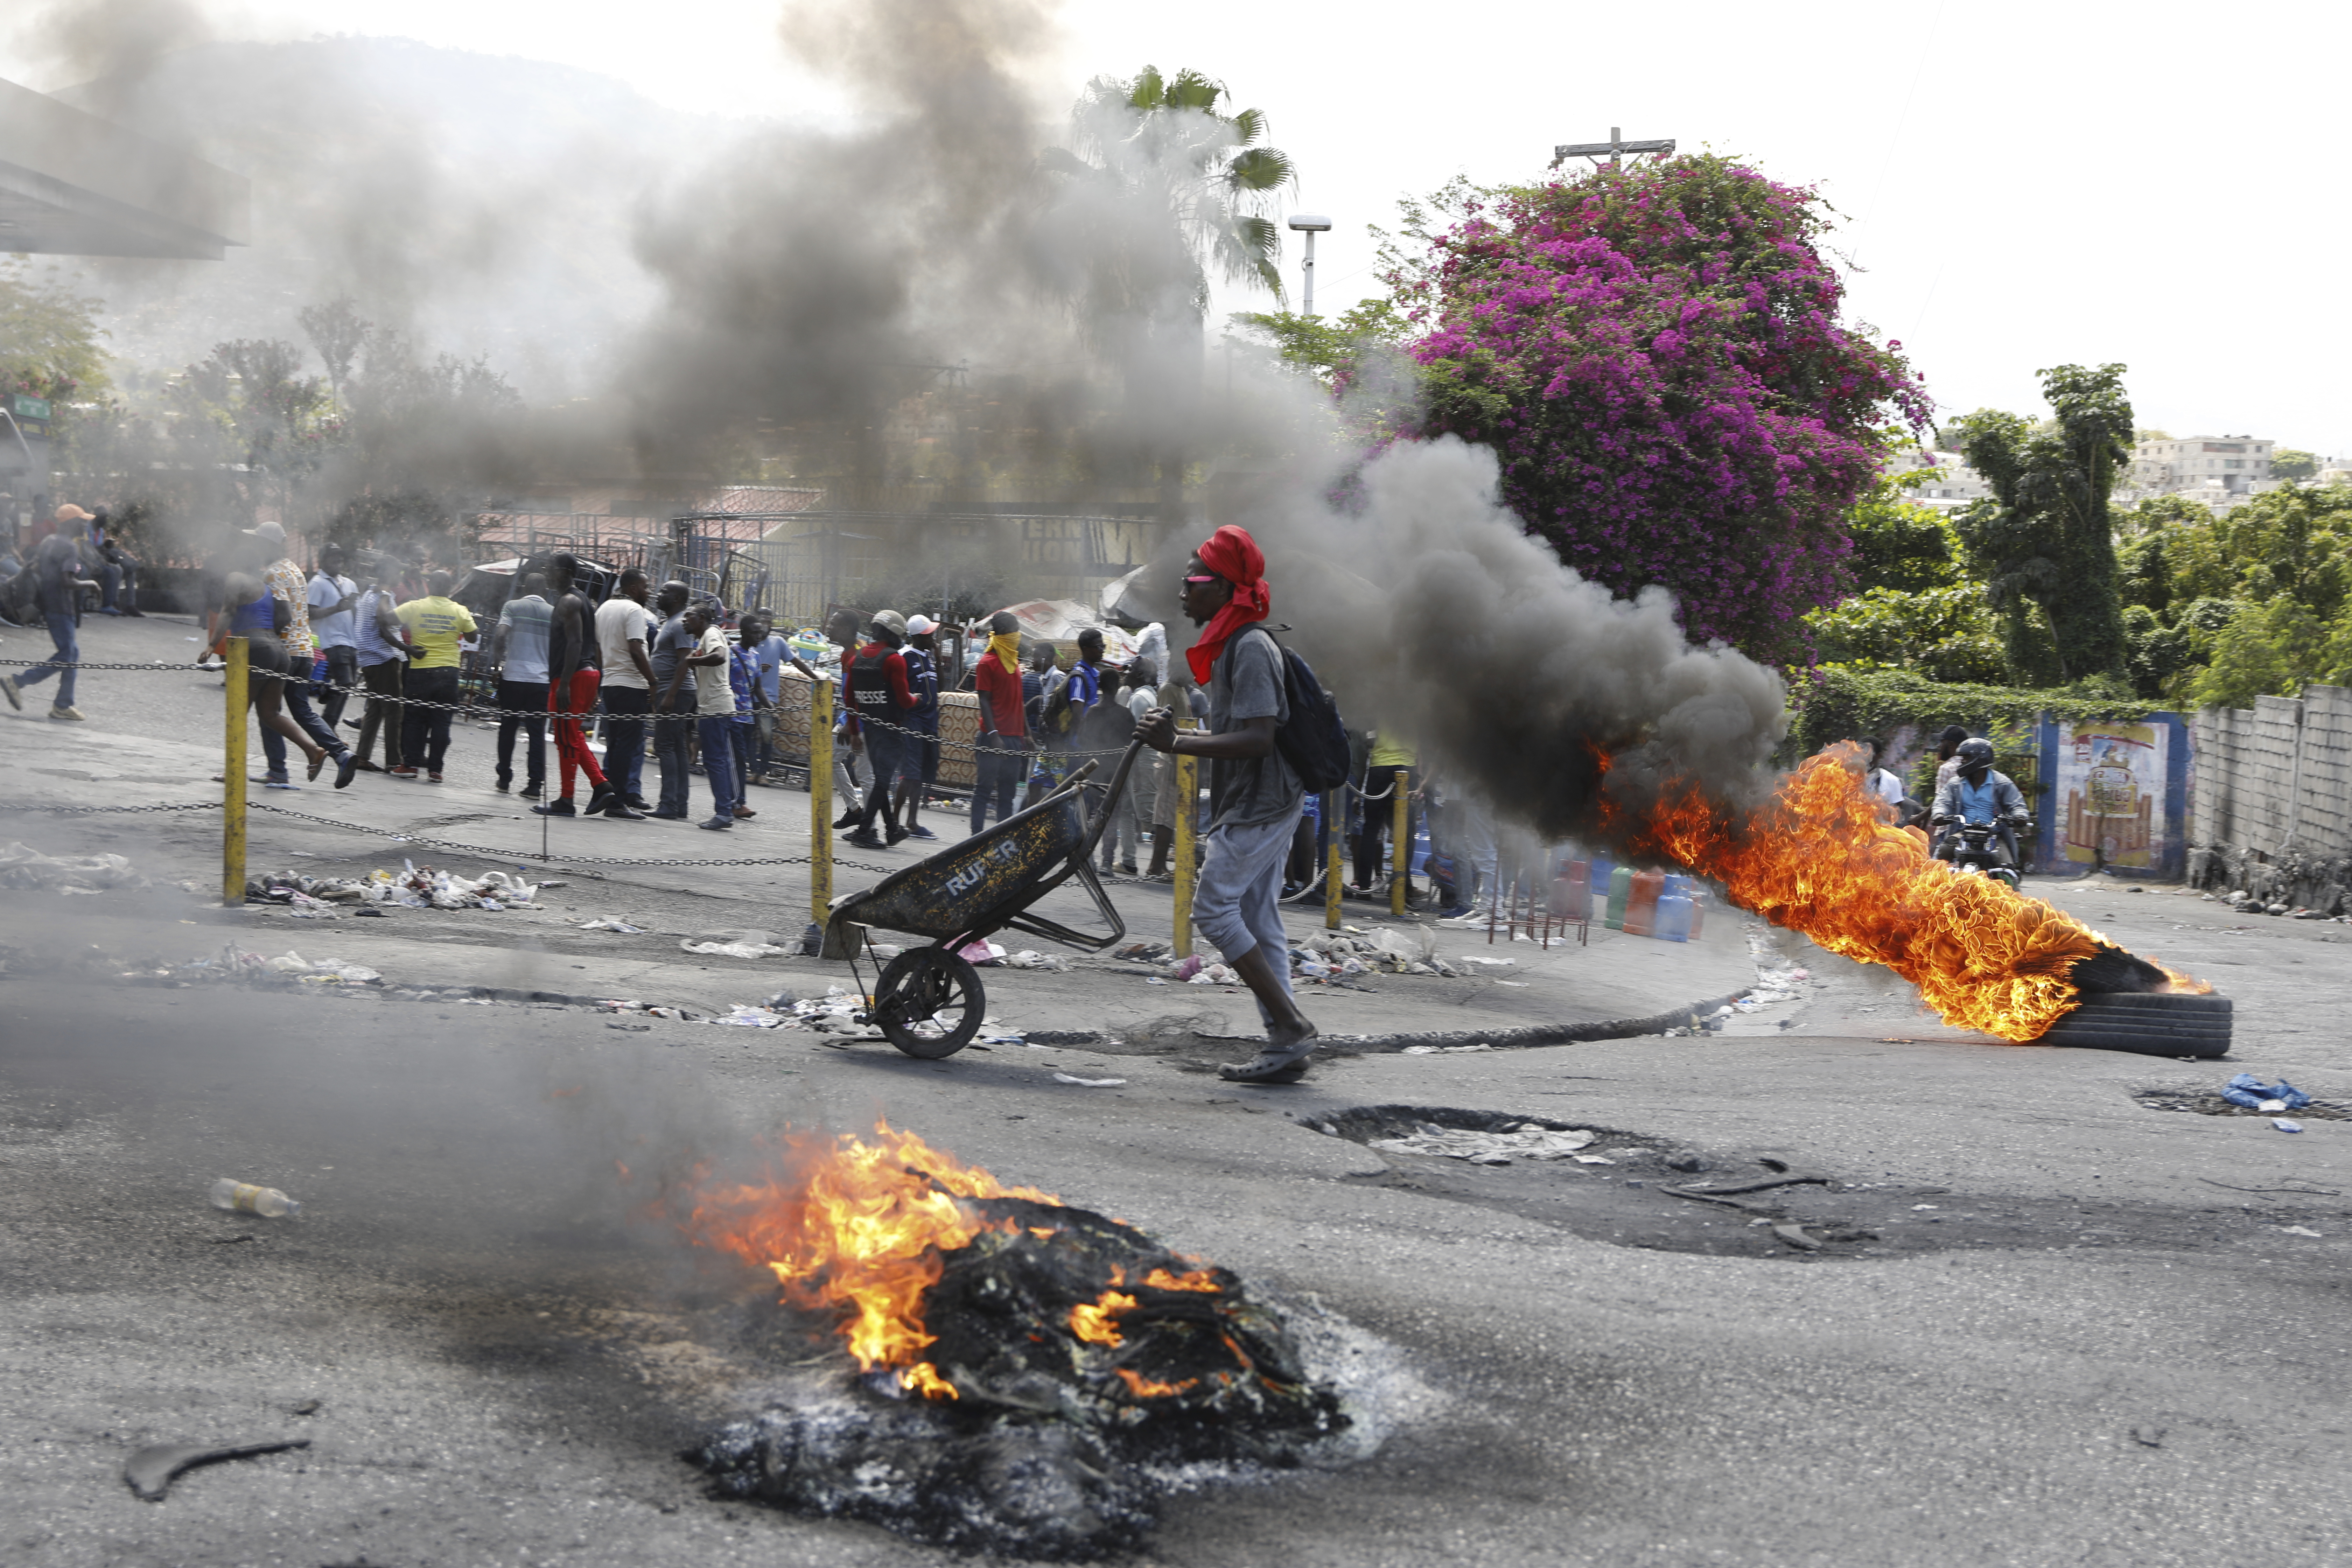 Haitian Montrealers raise concerns, dim outlooks over violence in Haiti